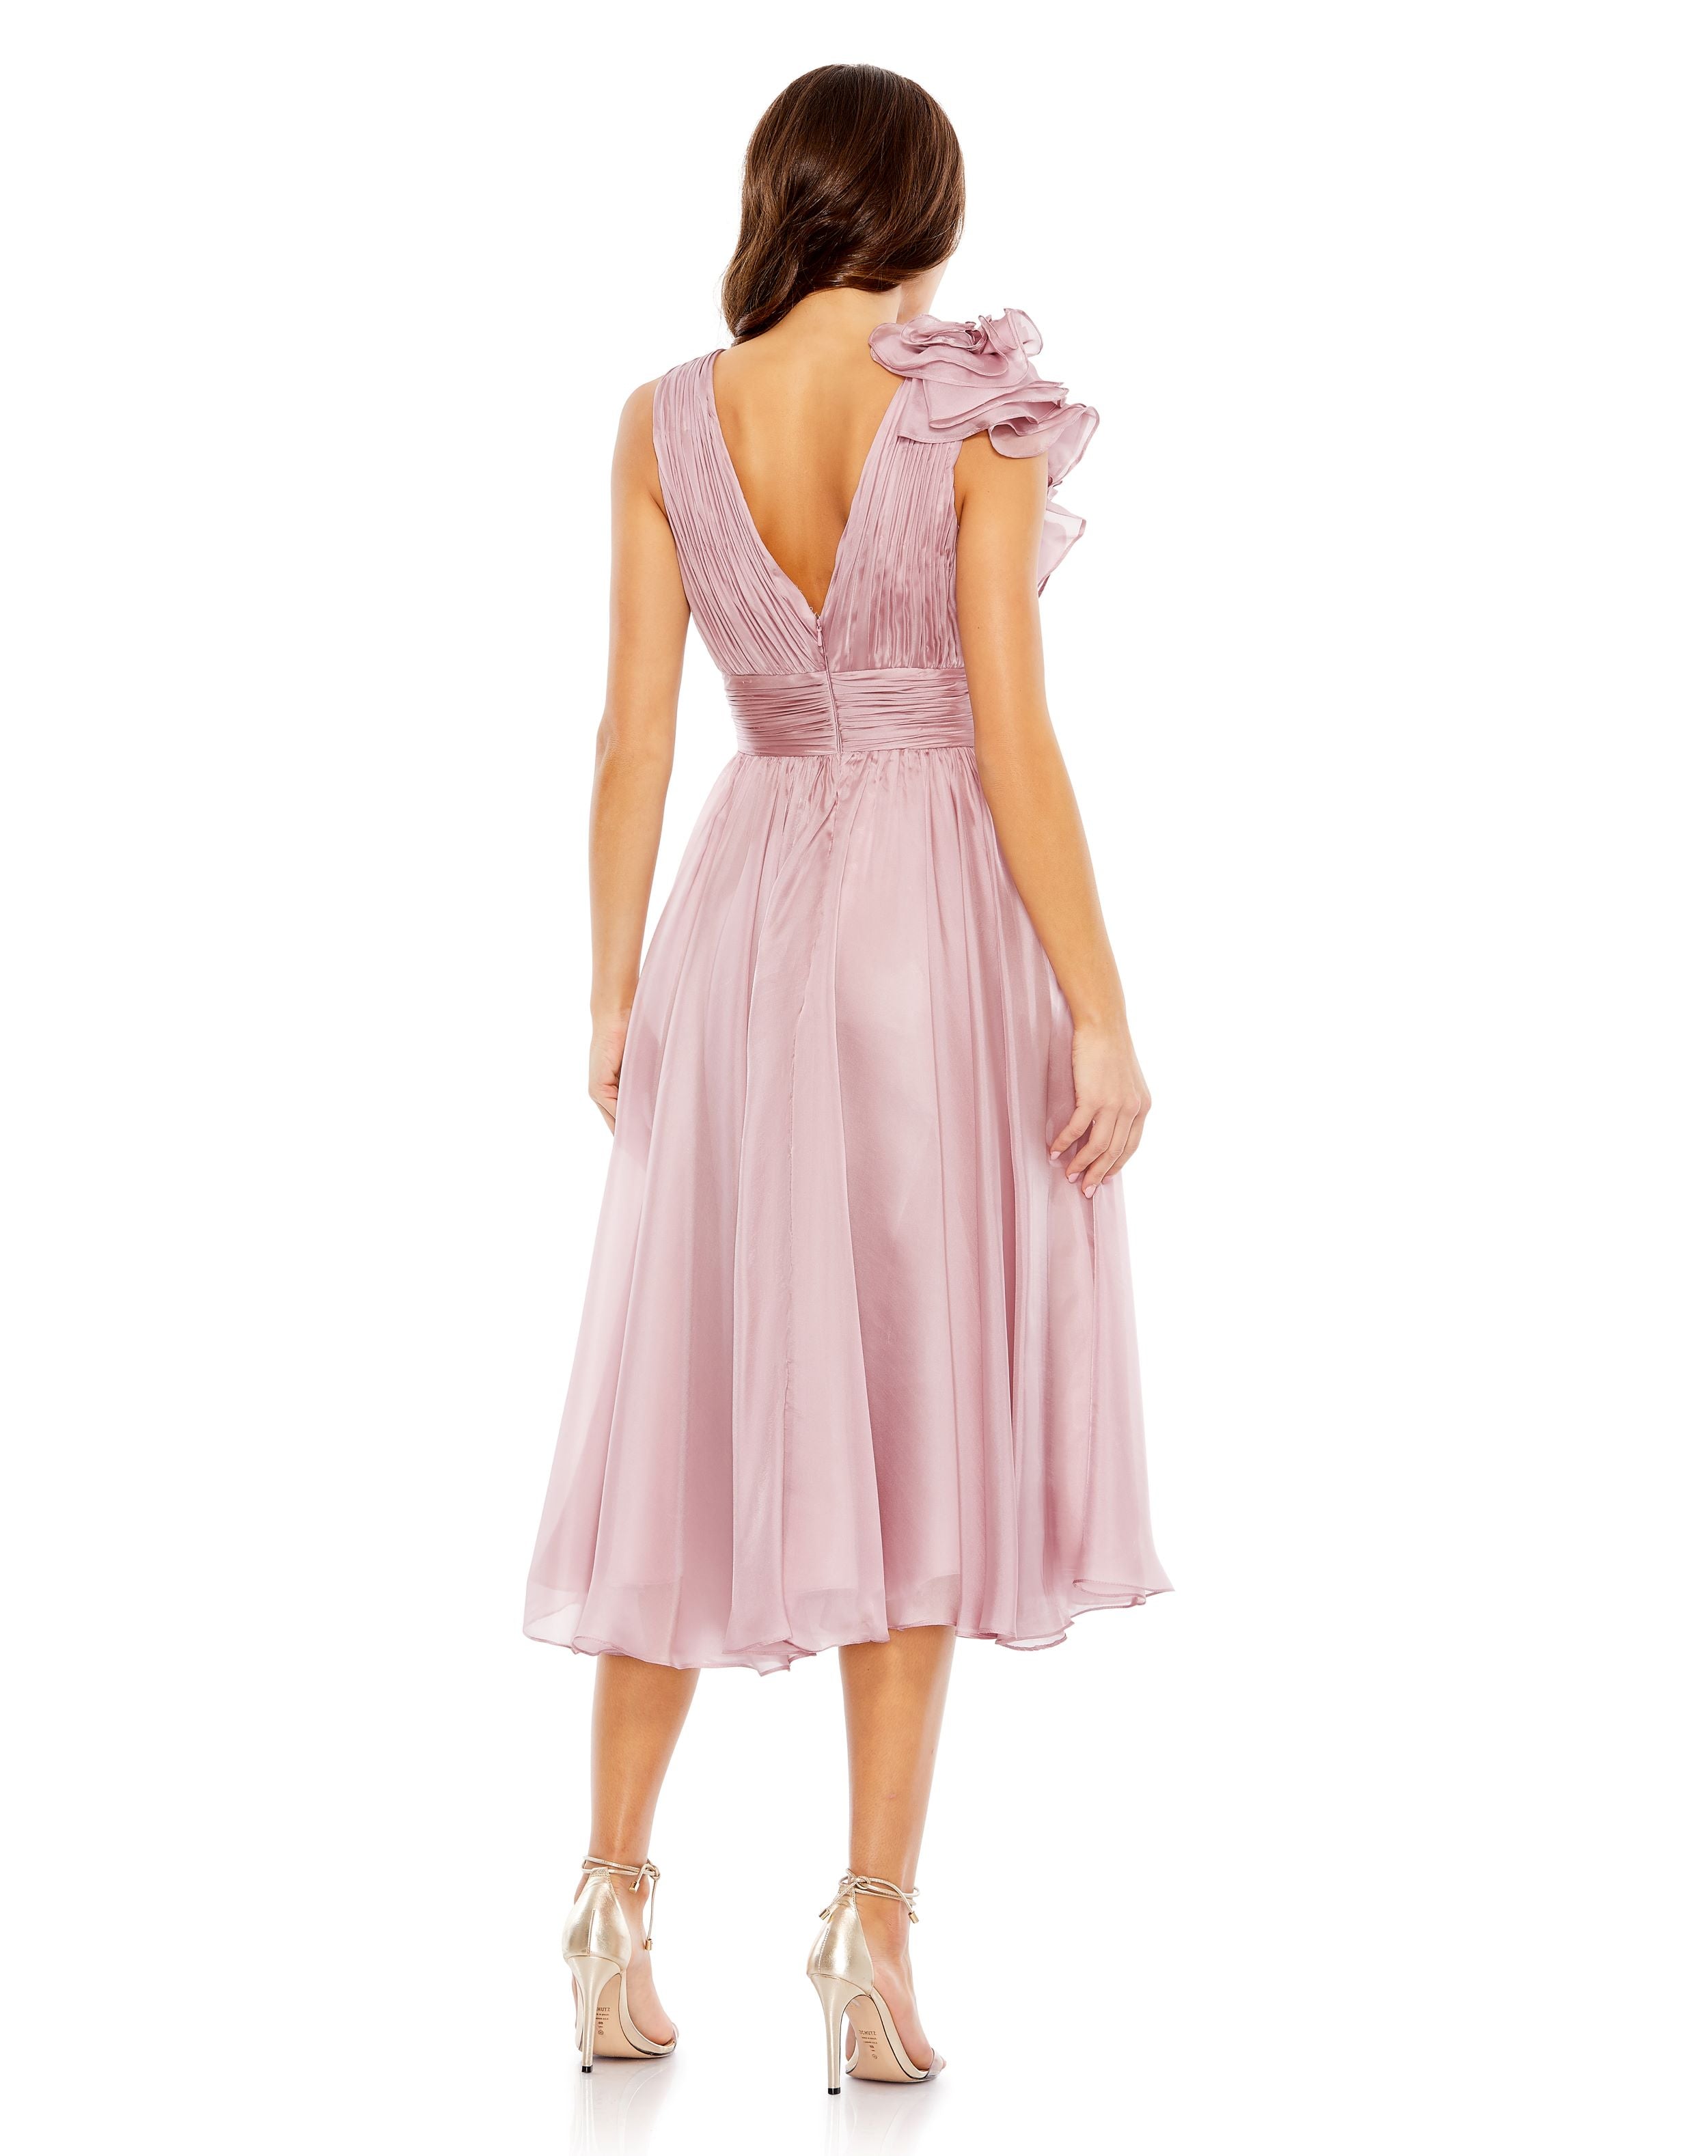 Sleeveless Chiffon A-Line Tea Length Cocktail Dress